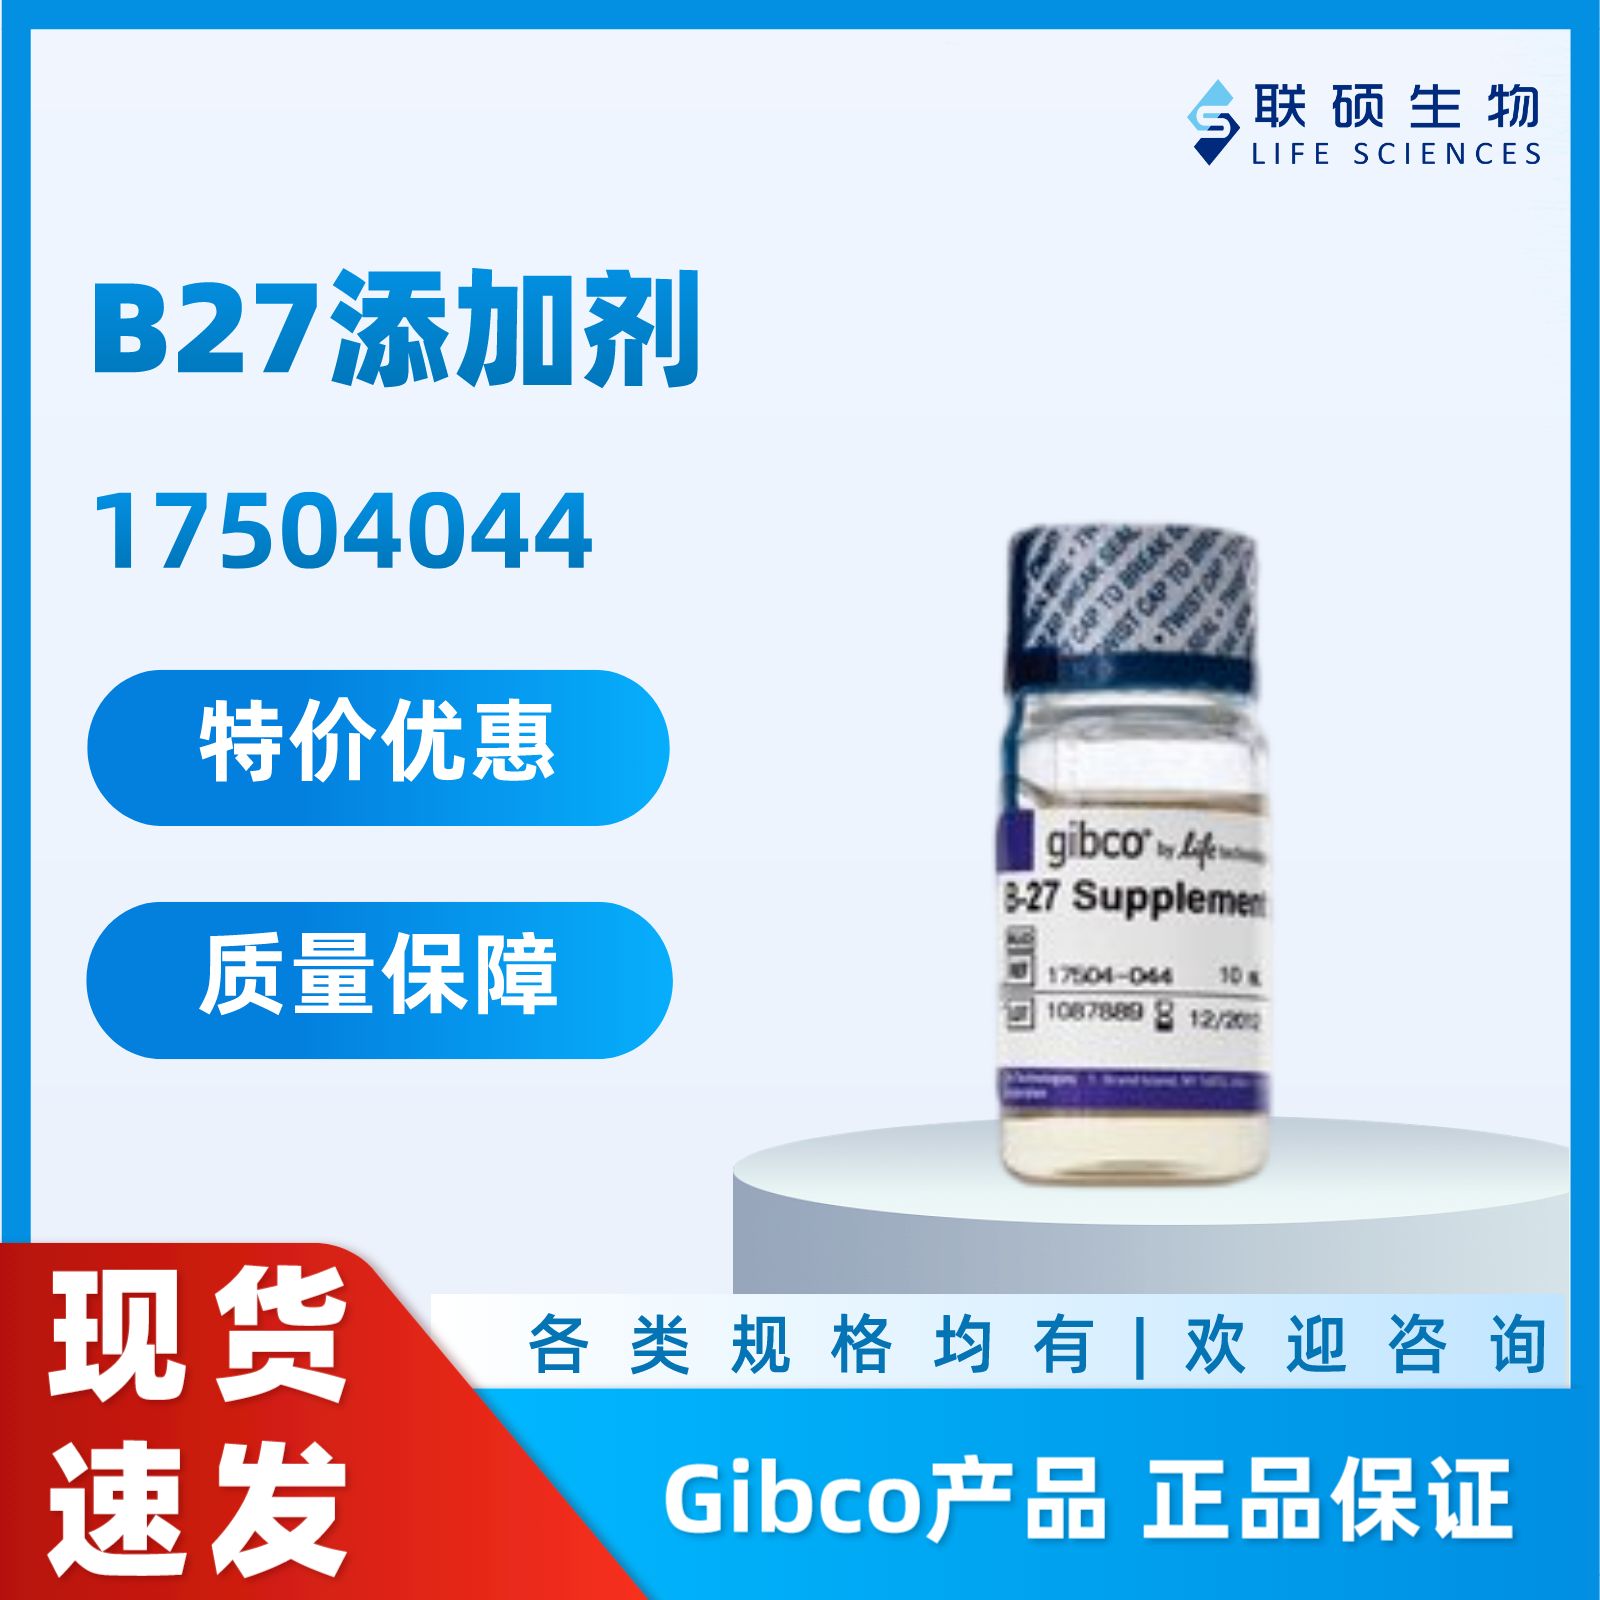 B27 Supplement